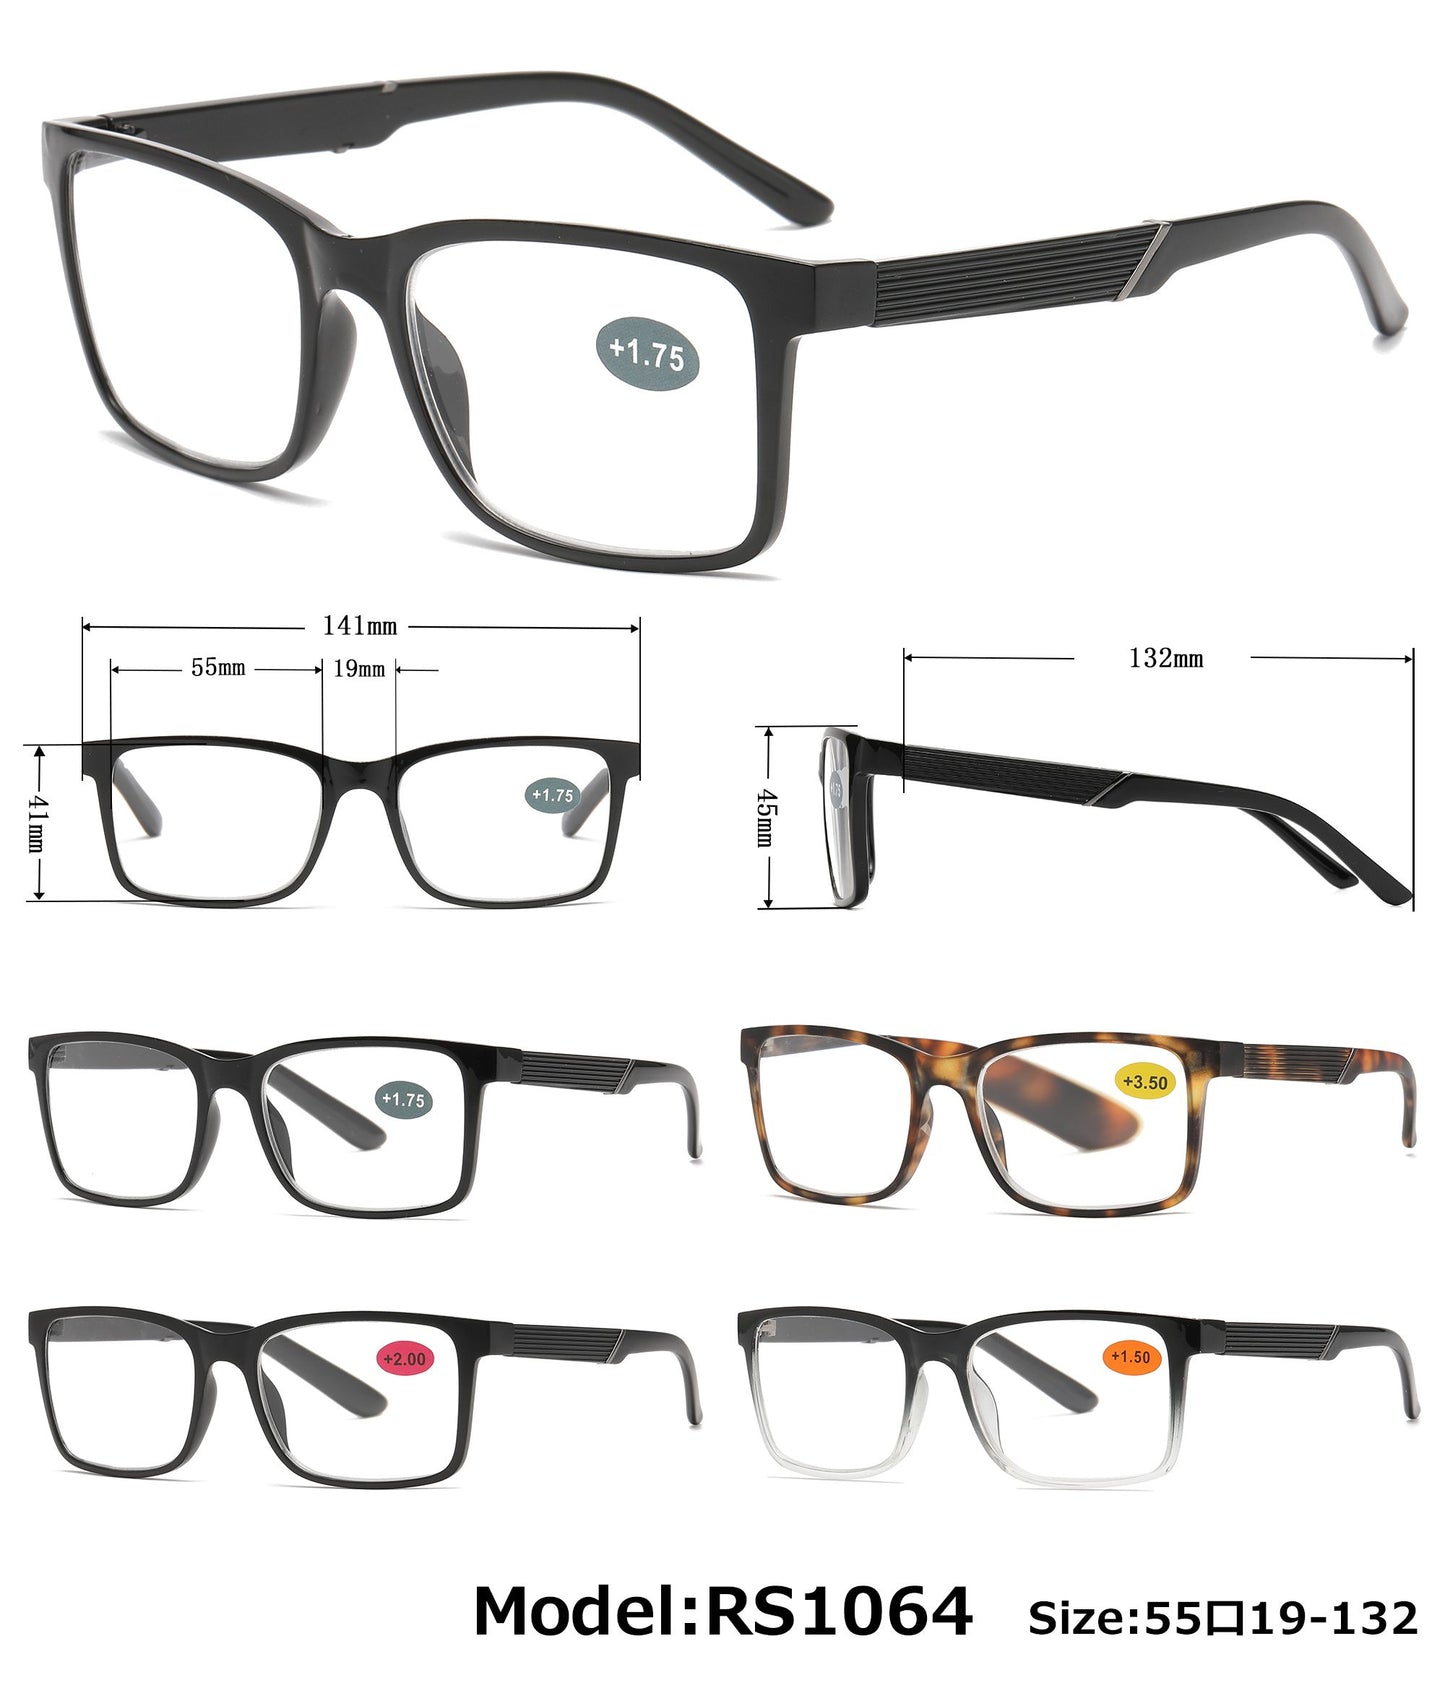 RS 1064 - Plastic Large Men's Reading Glasses